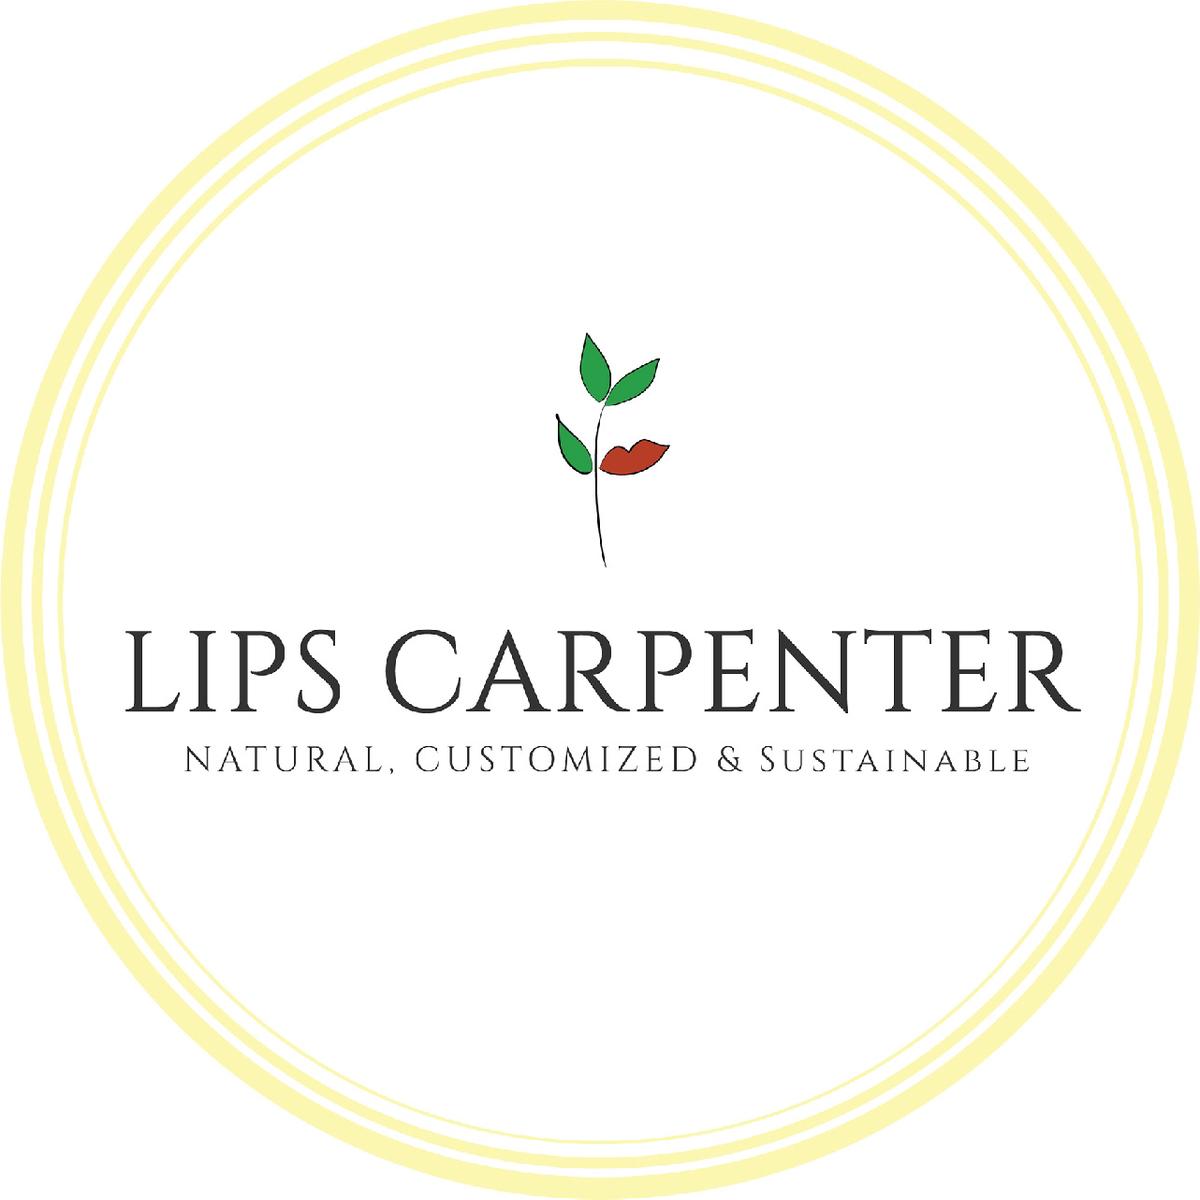 Lips Carpenter